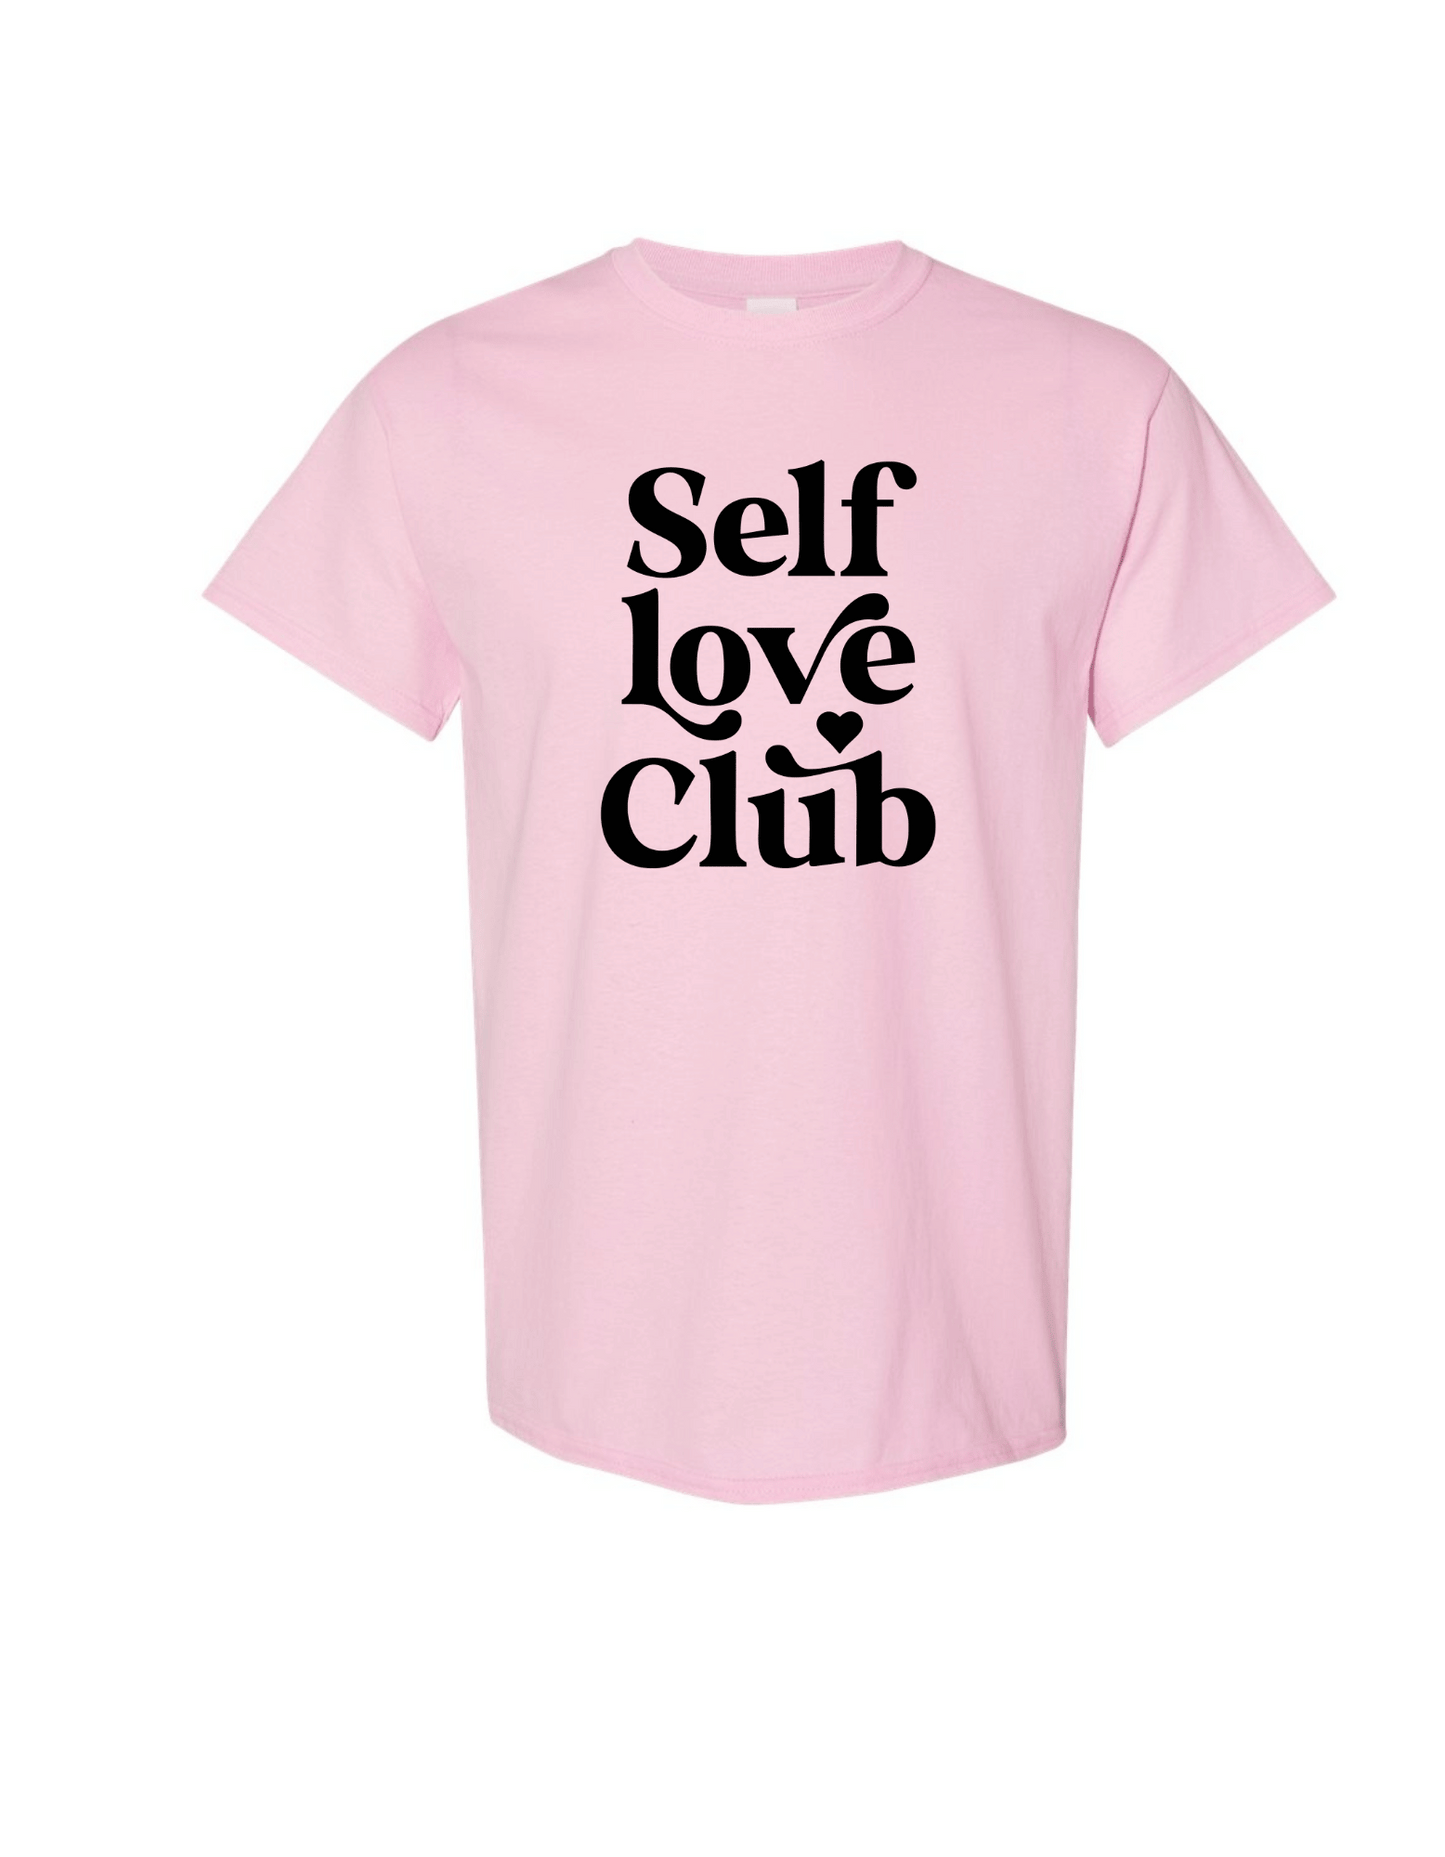 Made to Order Handmade Self Love Club Inspirational Short Sleeve Shirt